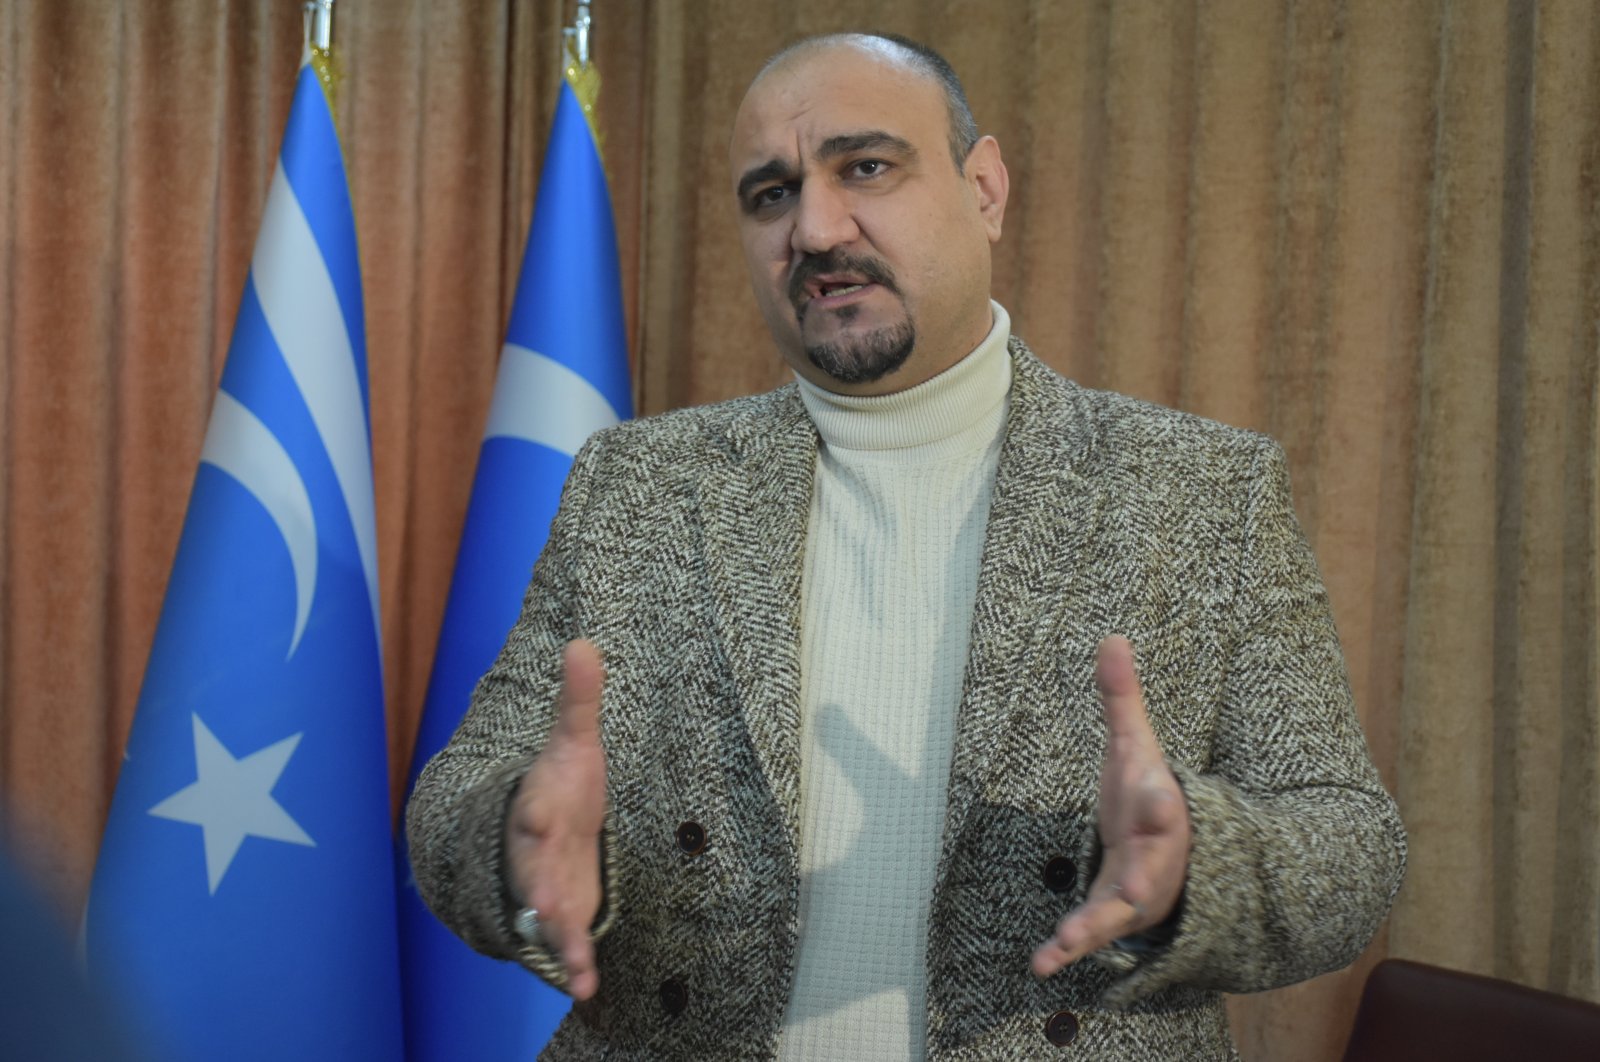 Muhammed Saman, the spokeperson for the Iraqi Turkmen Front (ITF), Feb. 11, 2022. (AA Photo)